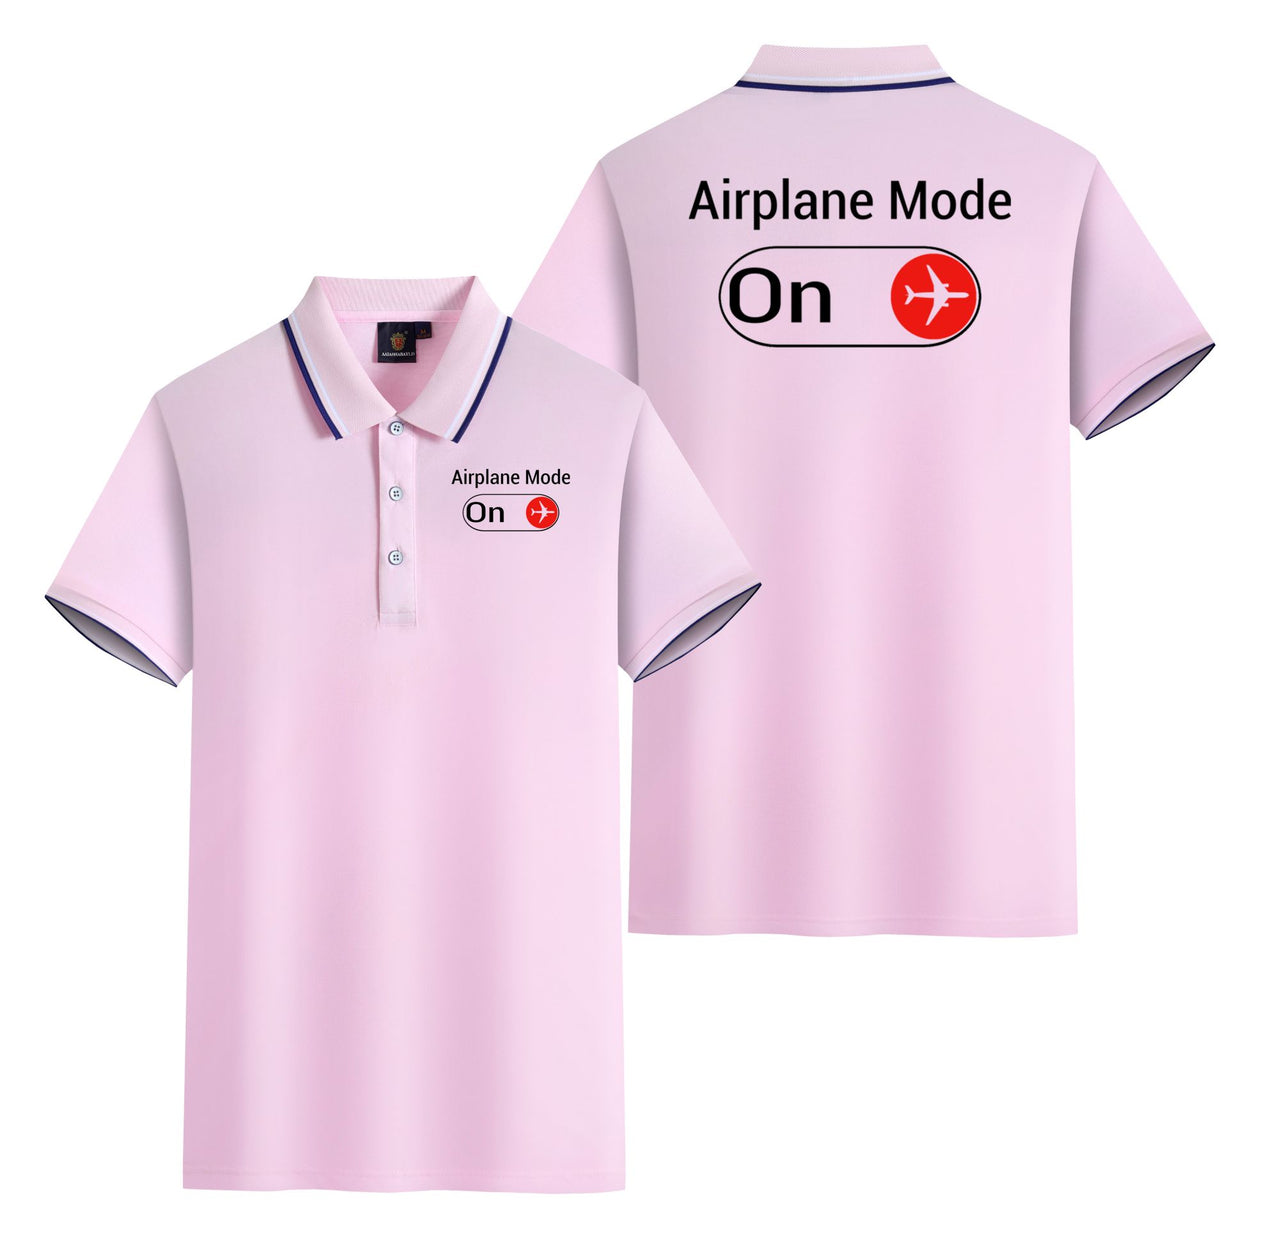 Airplane Mode On Designed Stylish Polo T-Shirts (Double-Side)